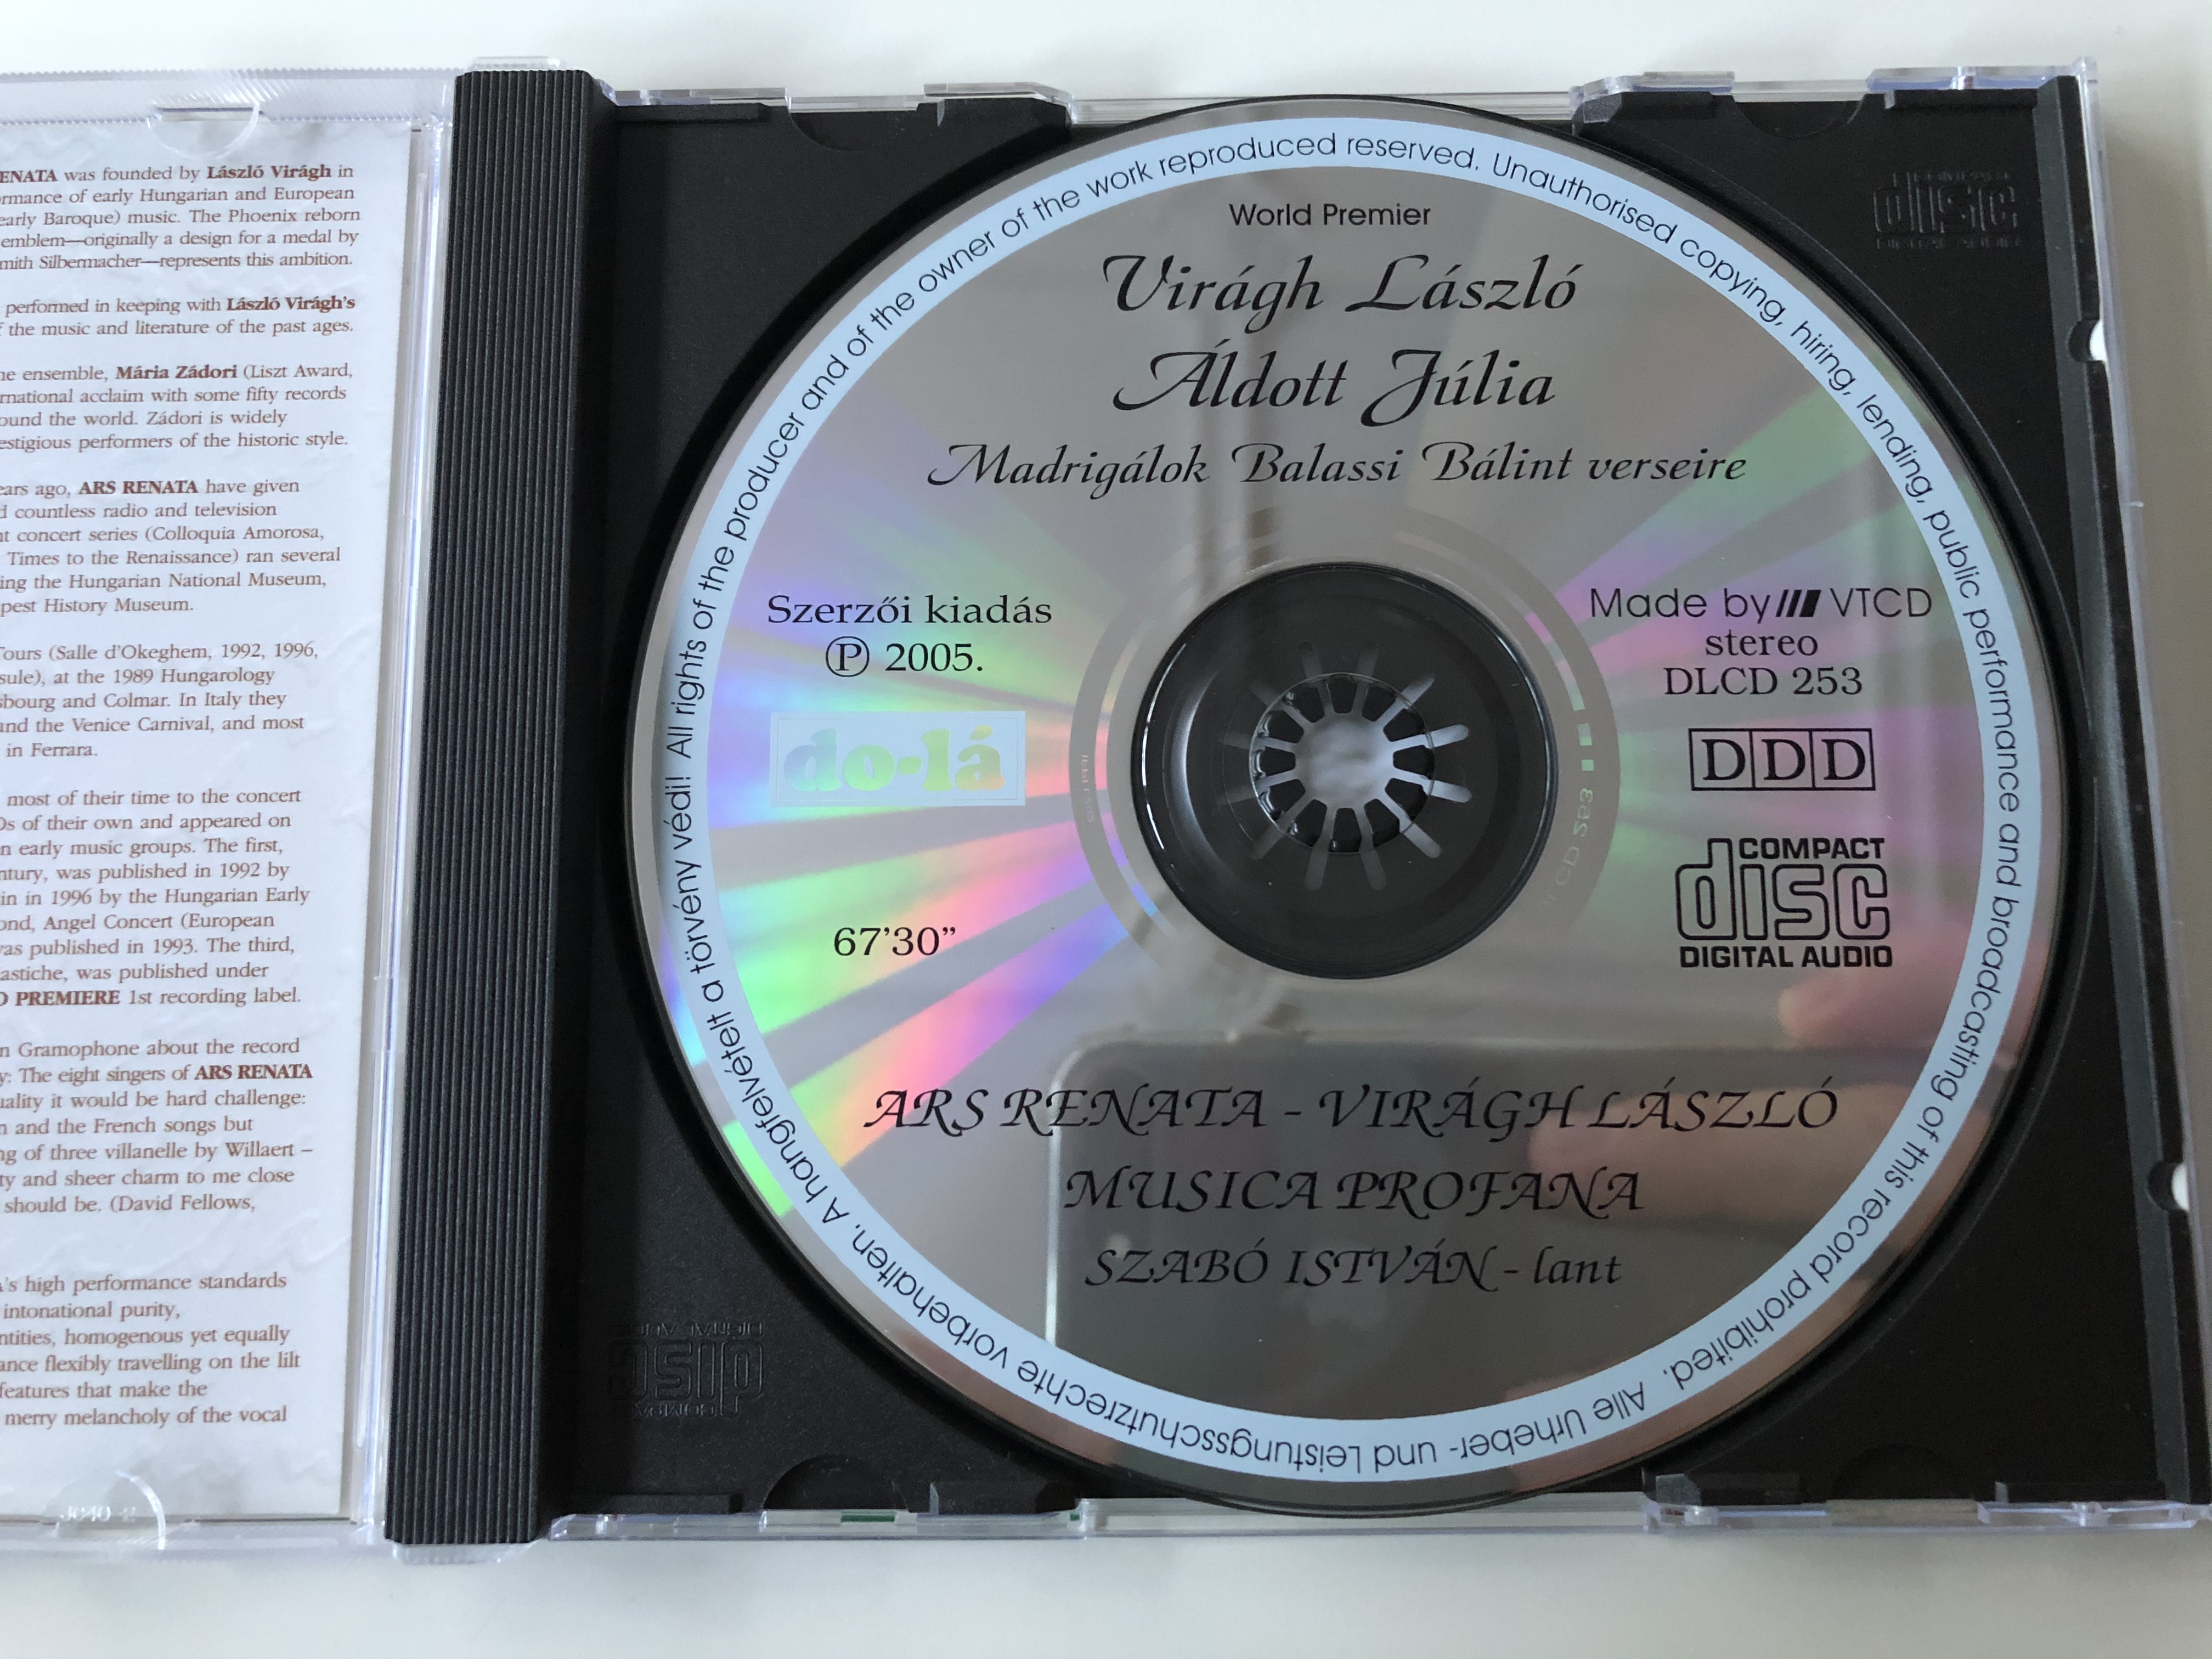 viragh-laszlo-aldott-julia-madrigalok-balassi-balint-versire-ars-renata-viragh-laszlo-musica-profana-szabo-istvan-lant-do-la-audio-cd-2005-stereo-dlcd-253-3-.jpg